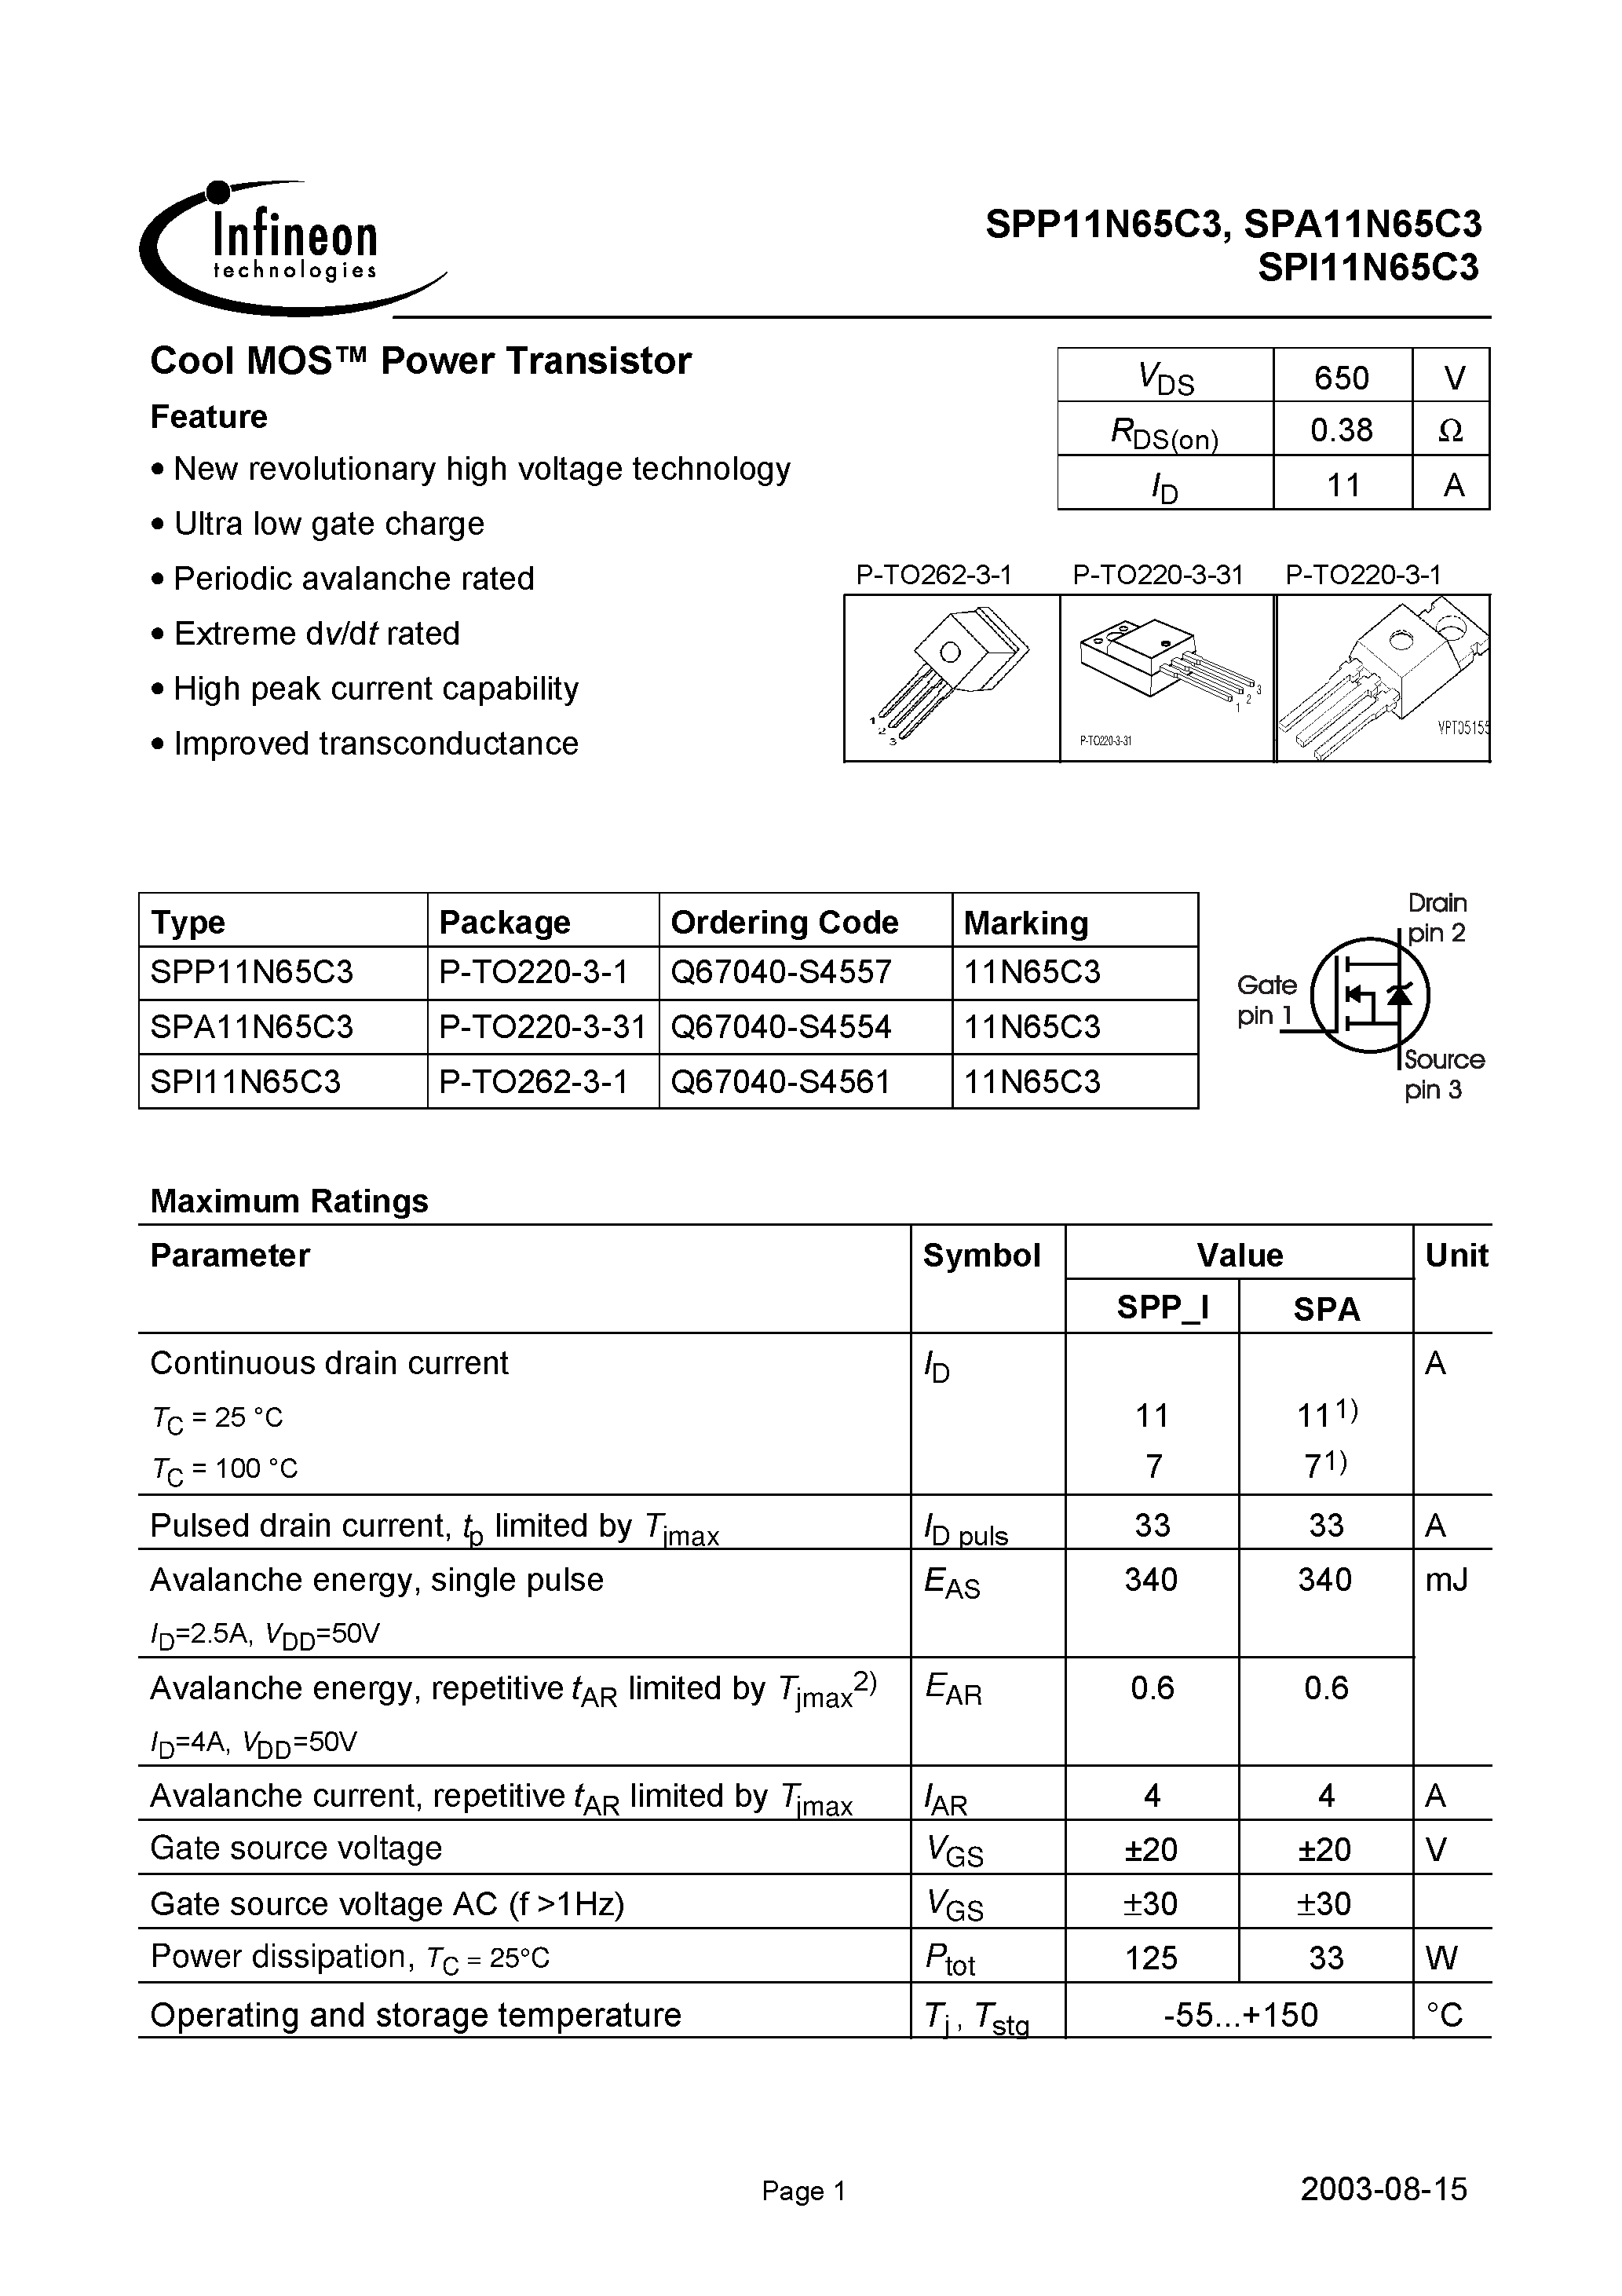 Datasheet SPI11N65C3 - Cool MOS Power Transistor page 1